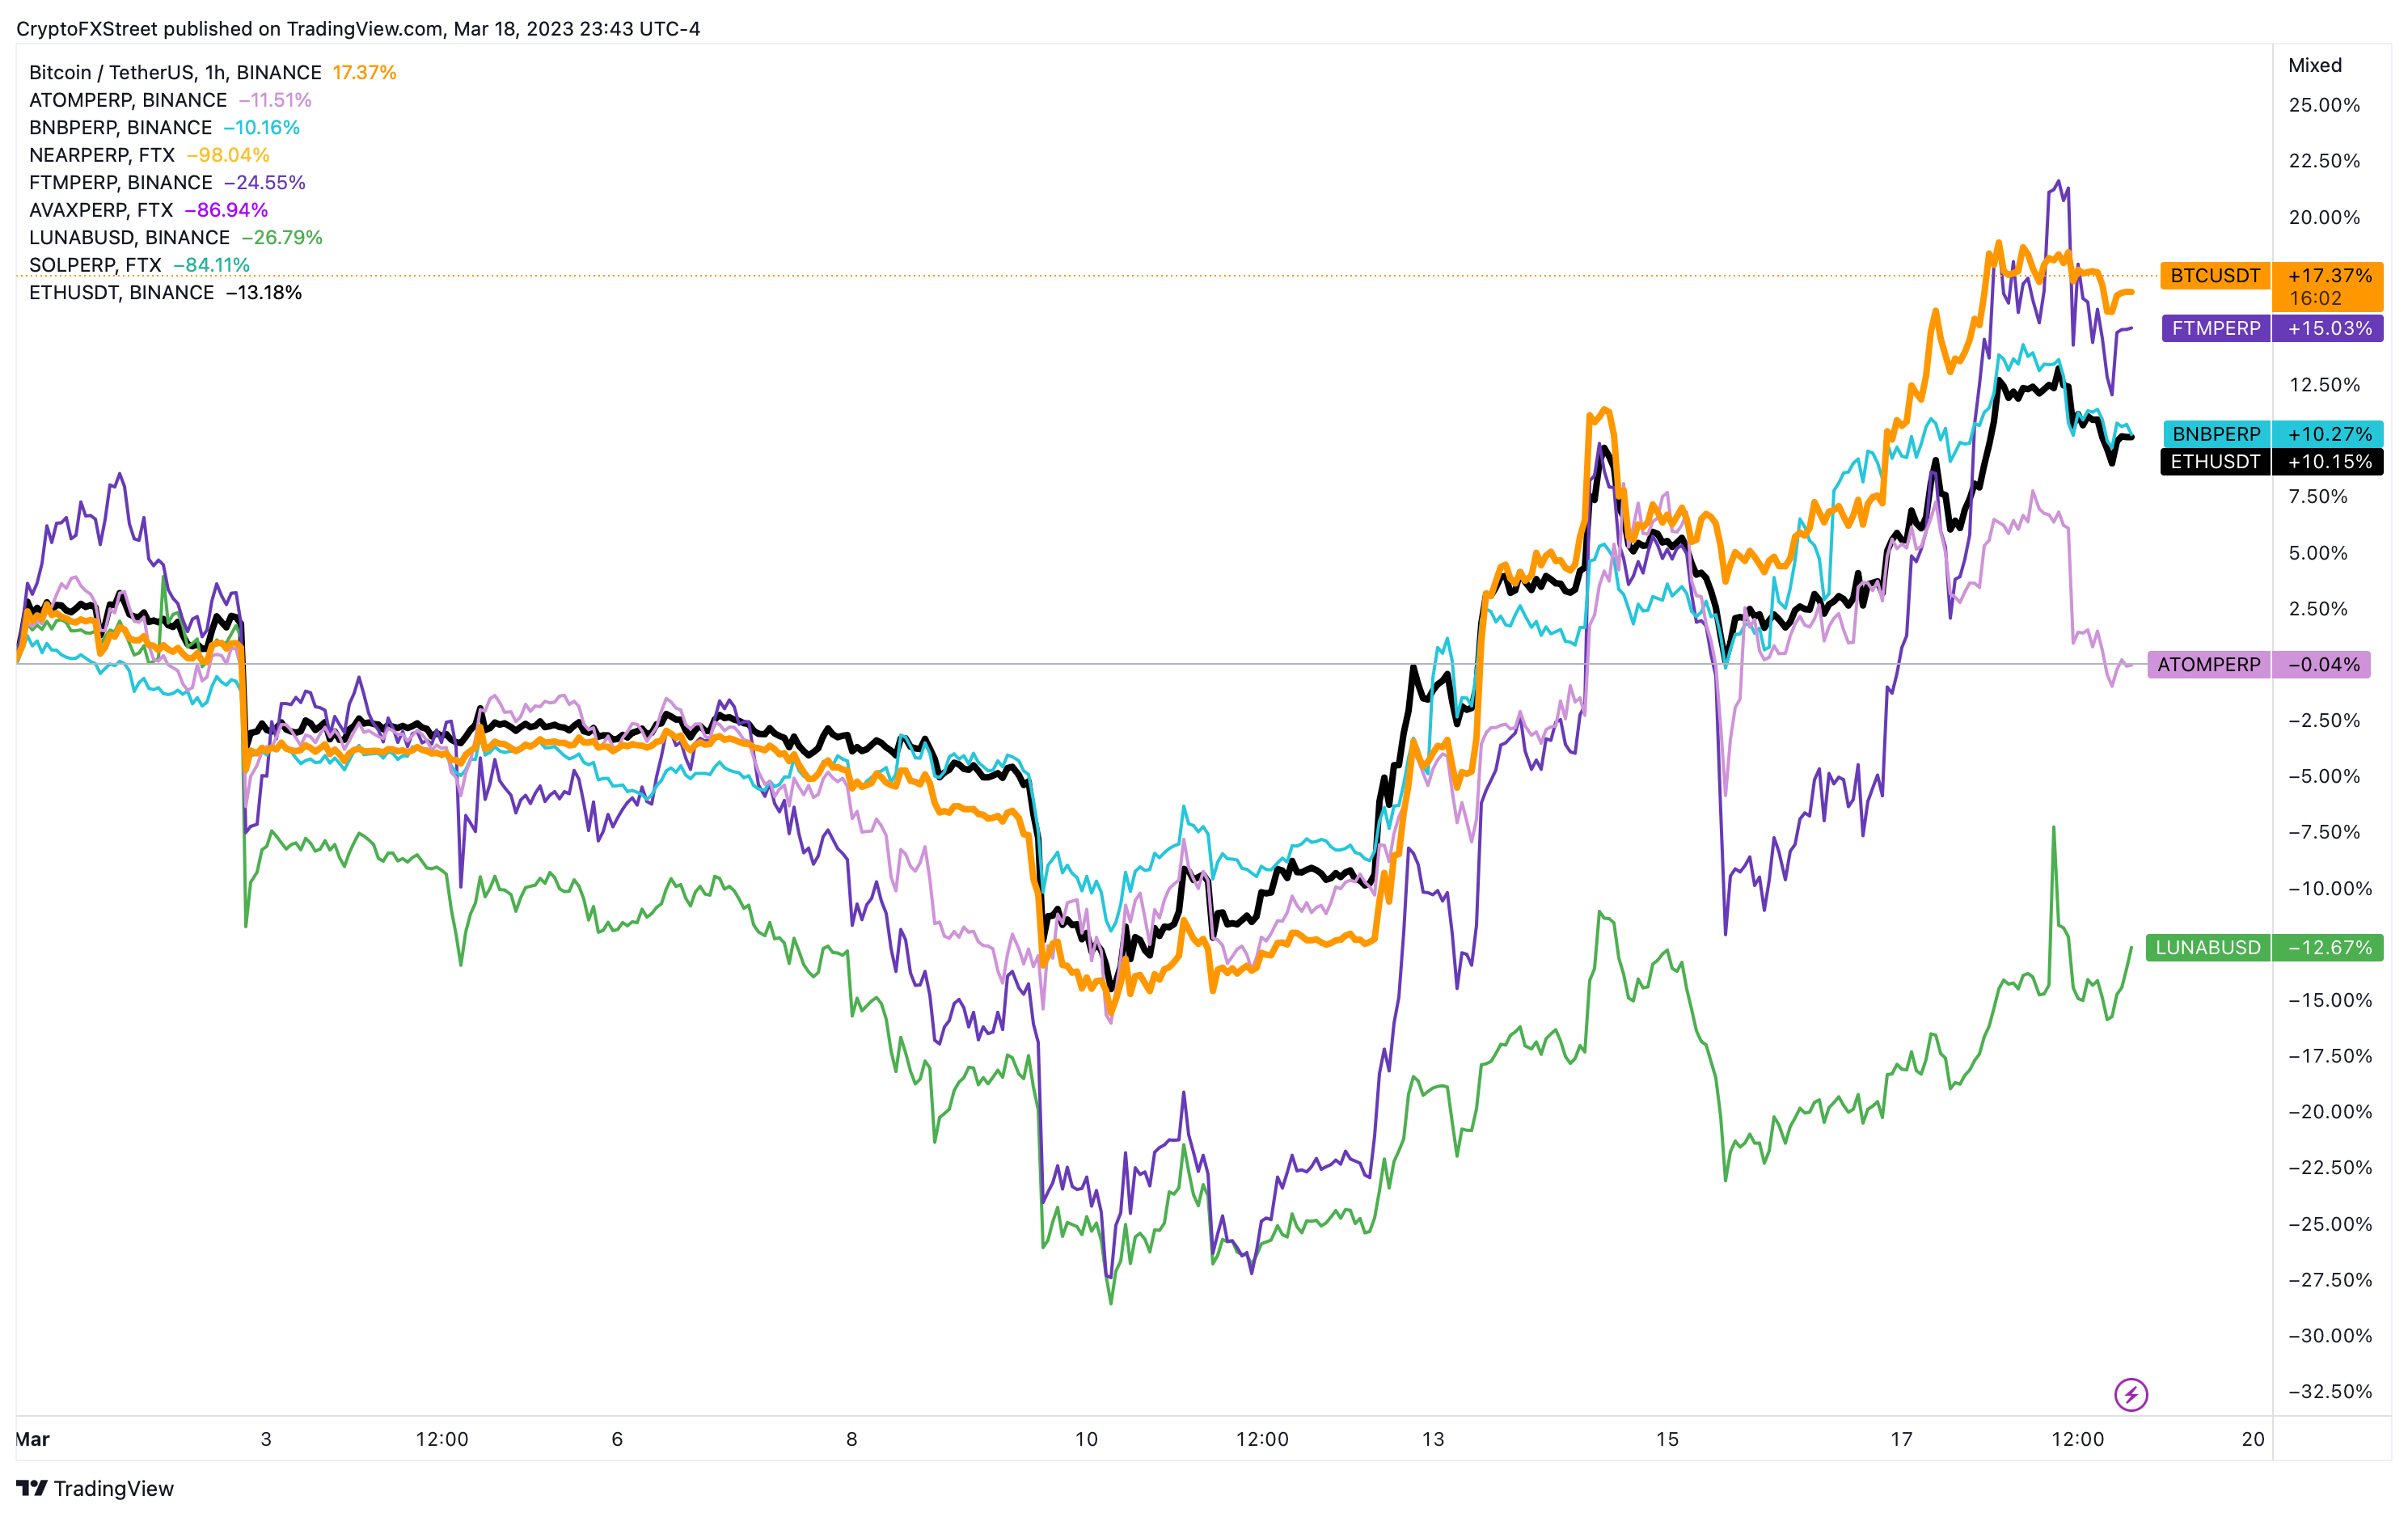 BTC vs. Altcoin performance chart